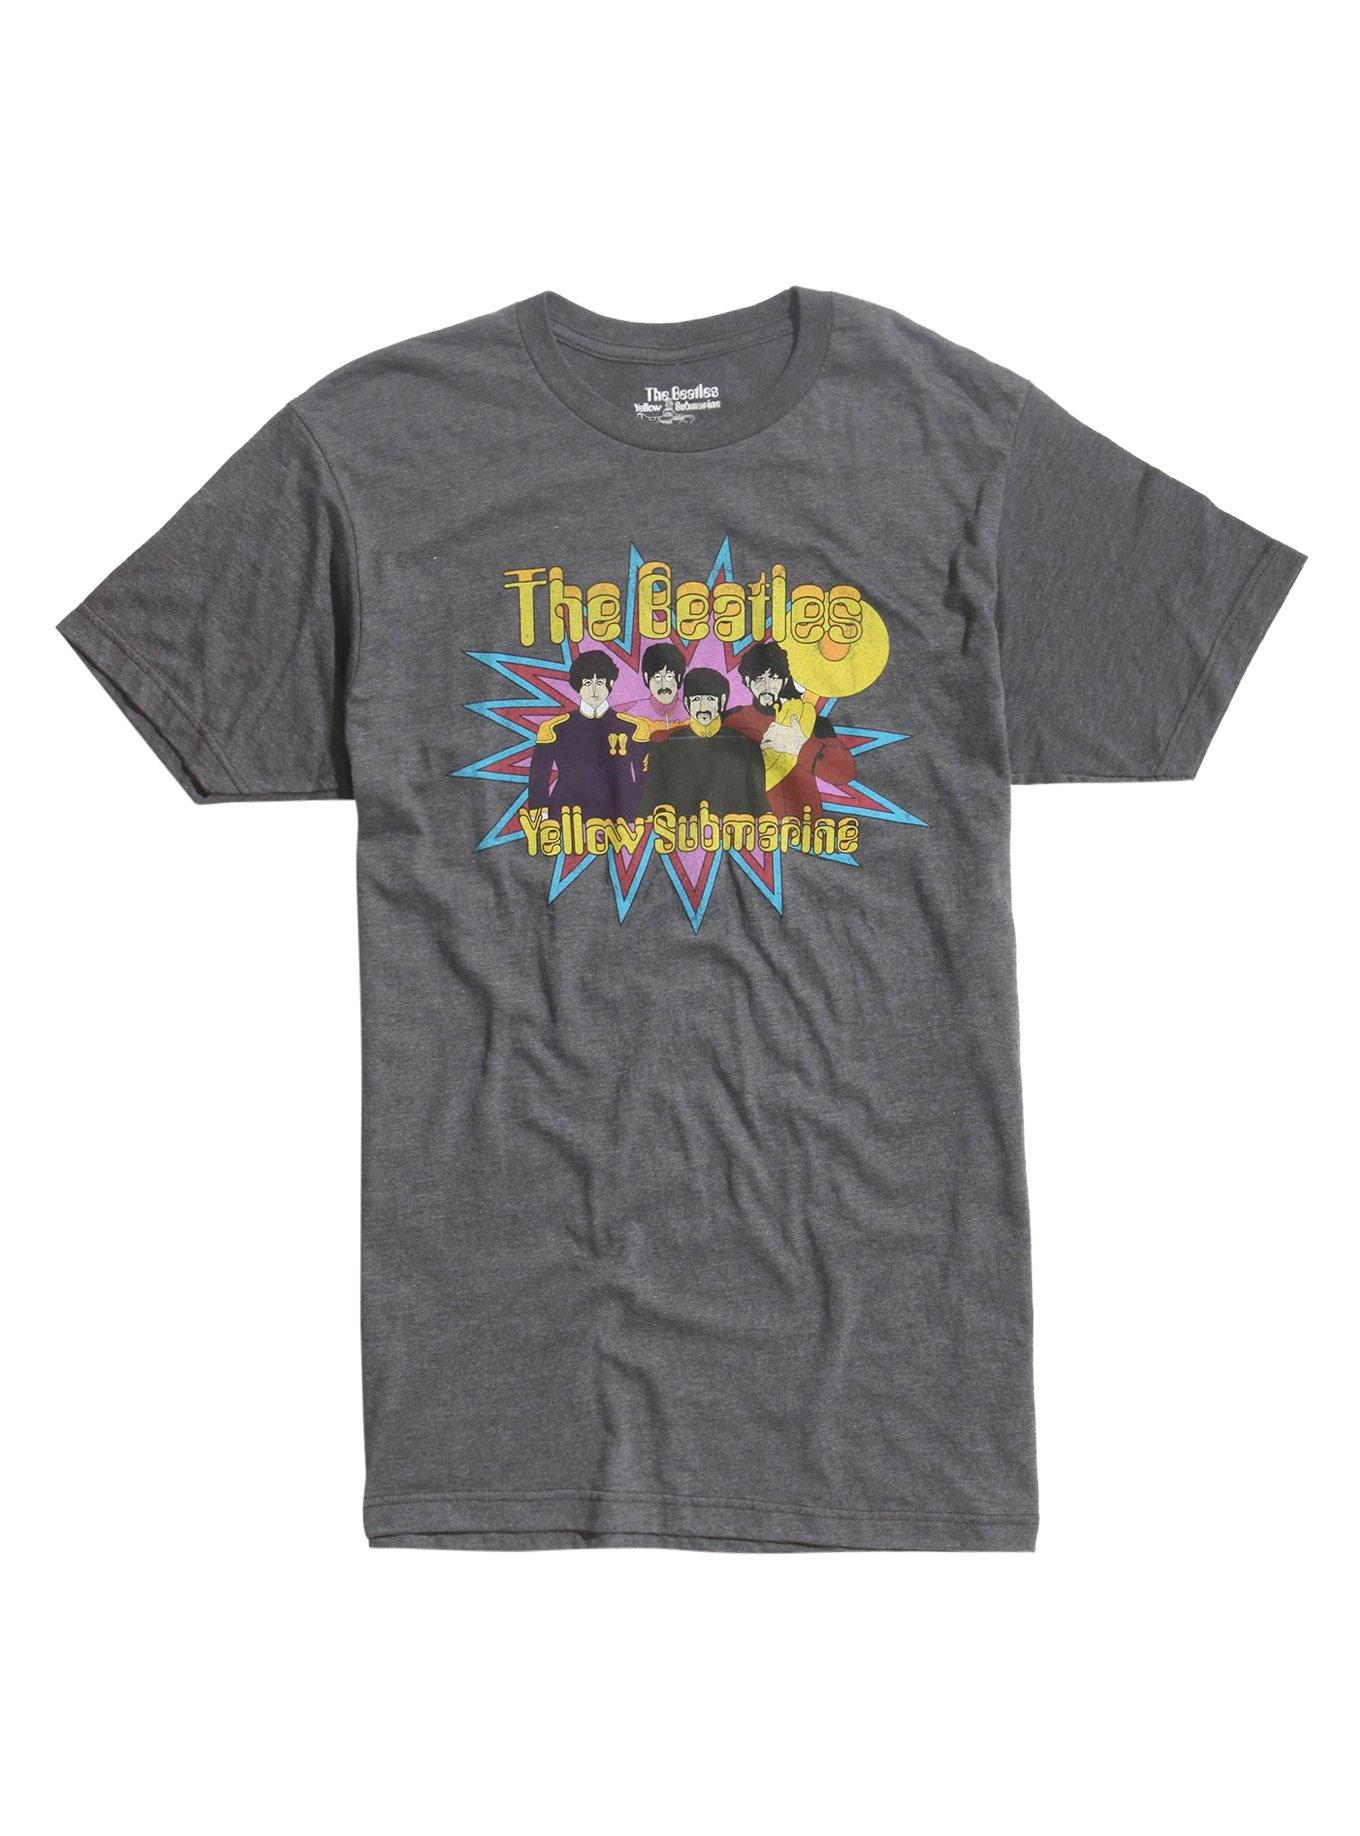 The Beatles Yellow Submarine Group T-Shirt | Hot Topic